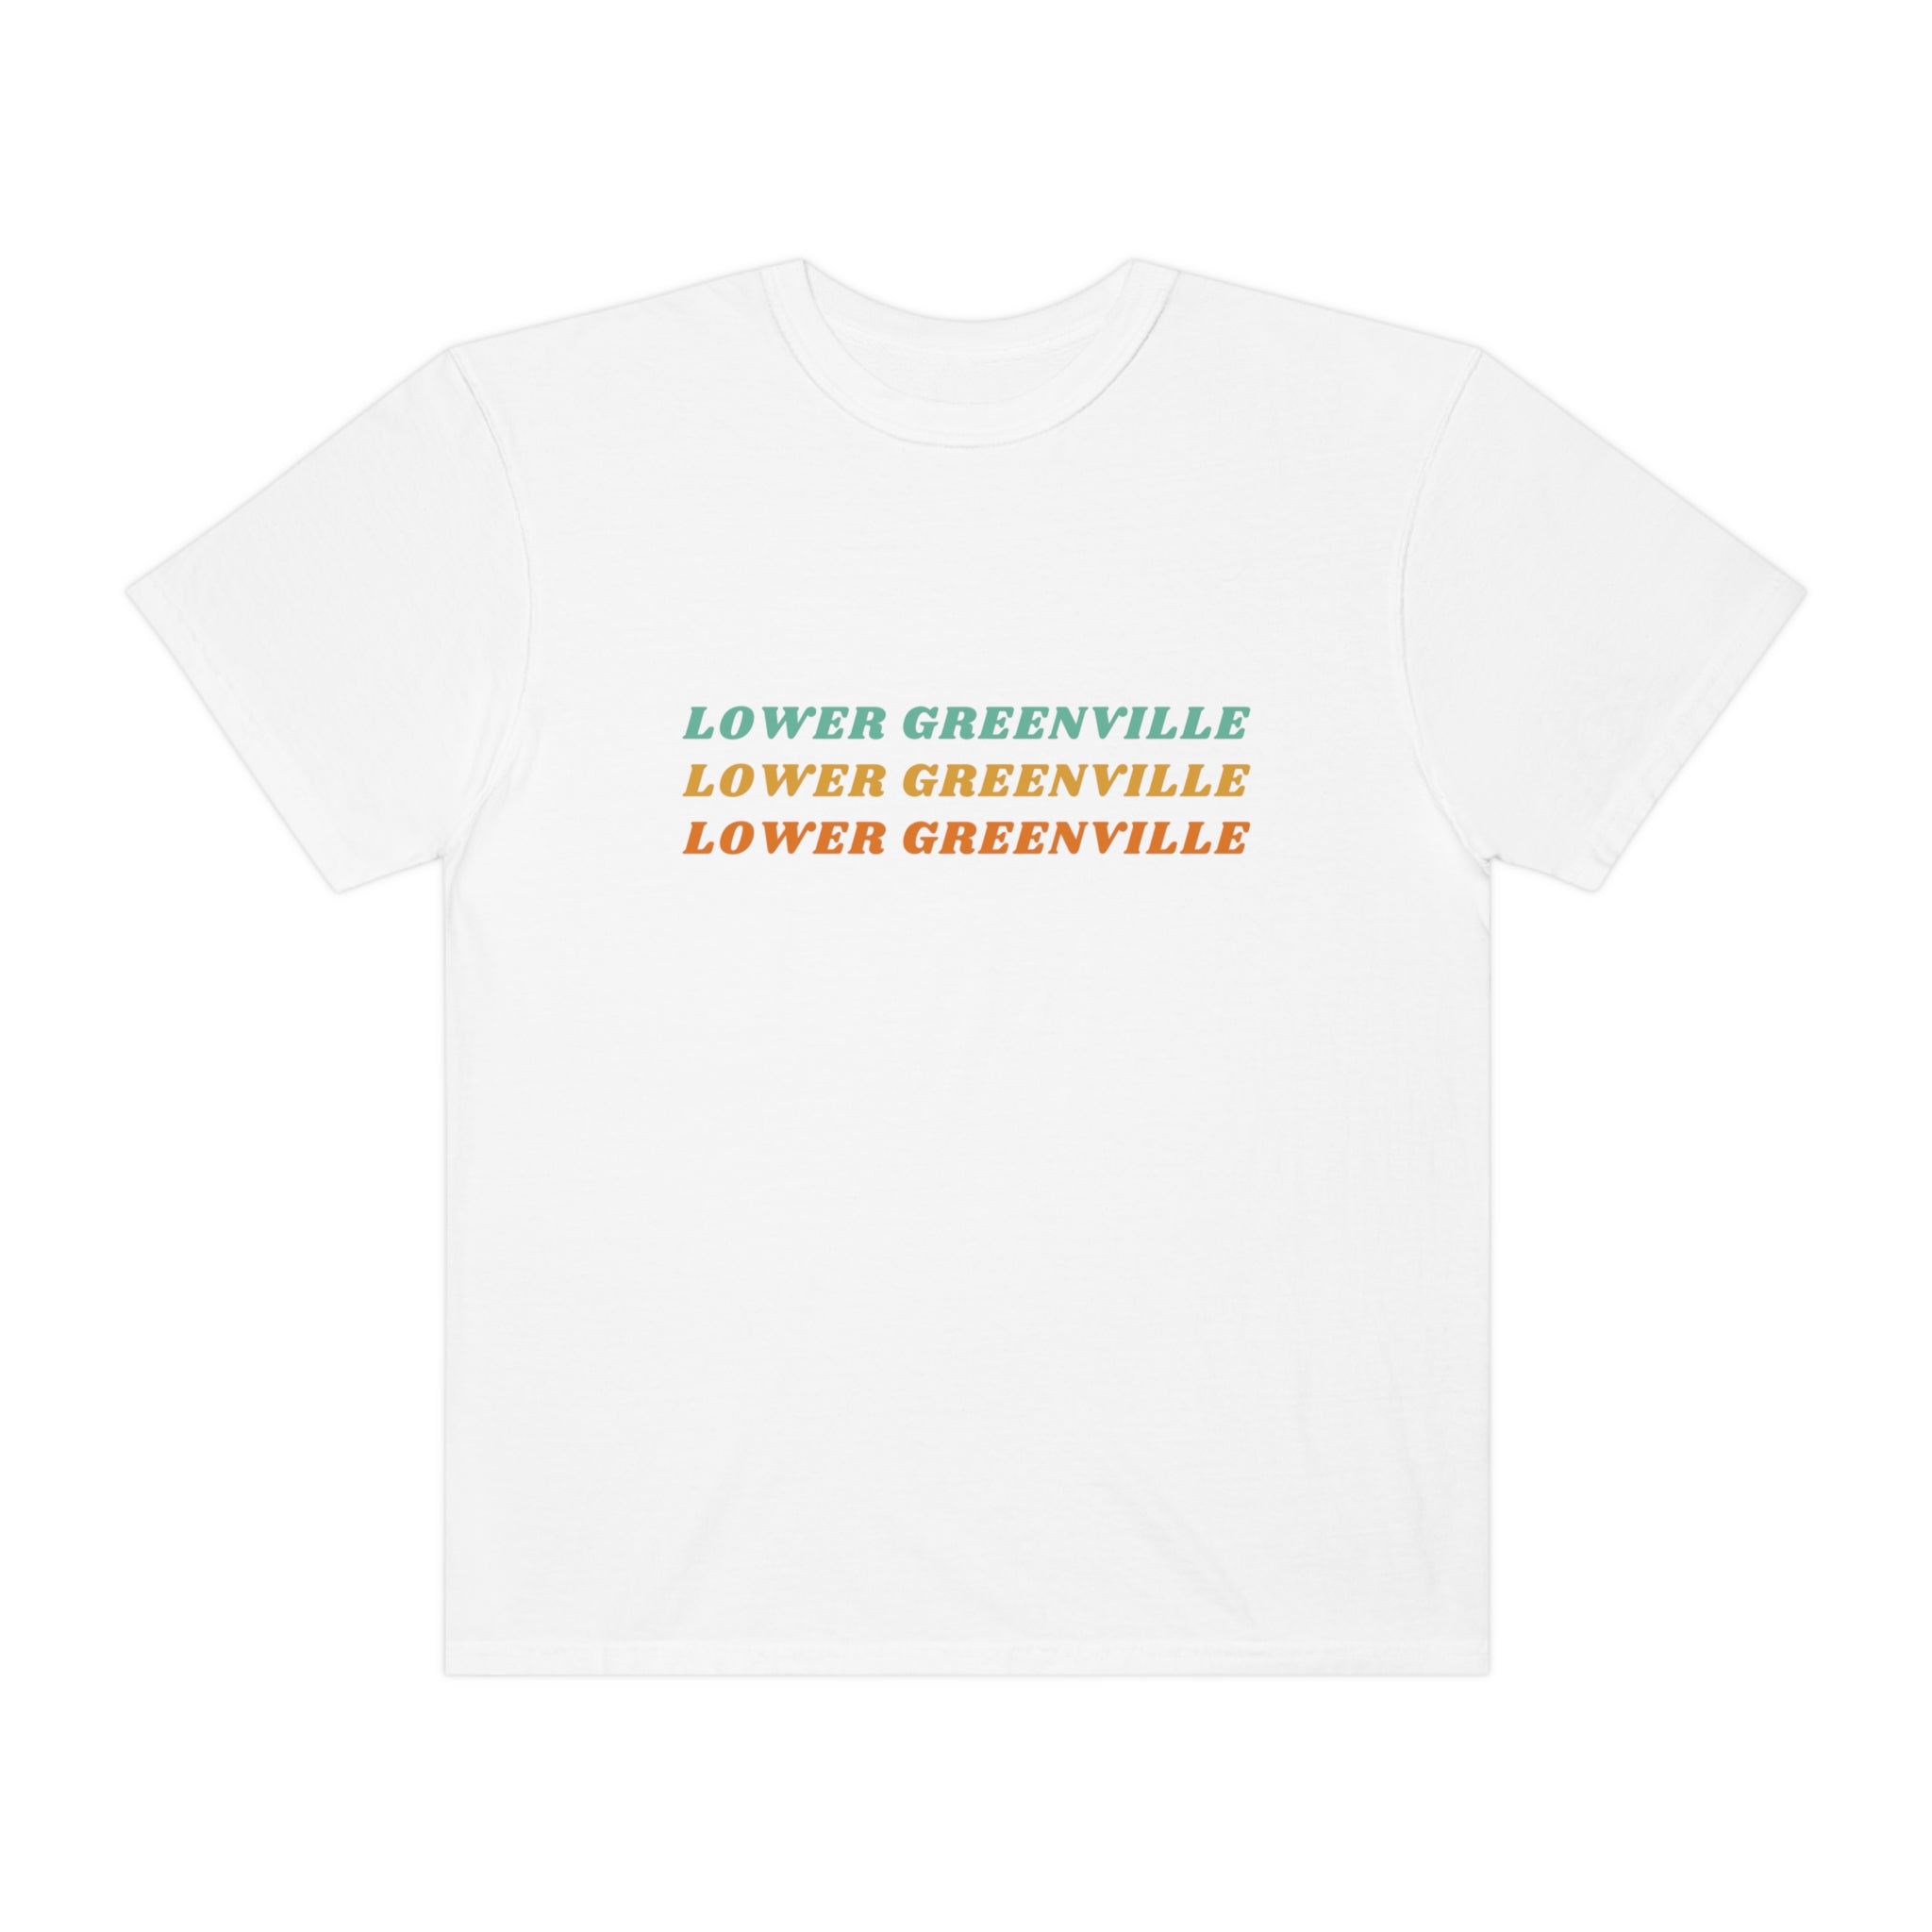 Lower Greenville Retro Typography T-shirt - Friends of Lower Greenville